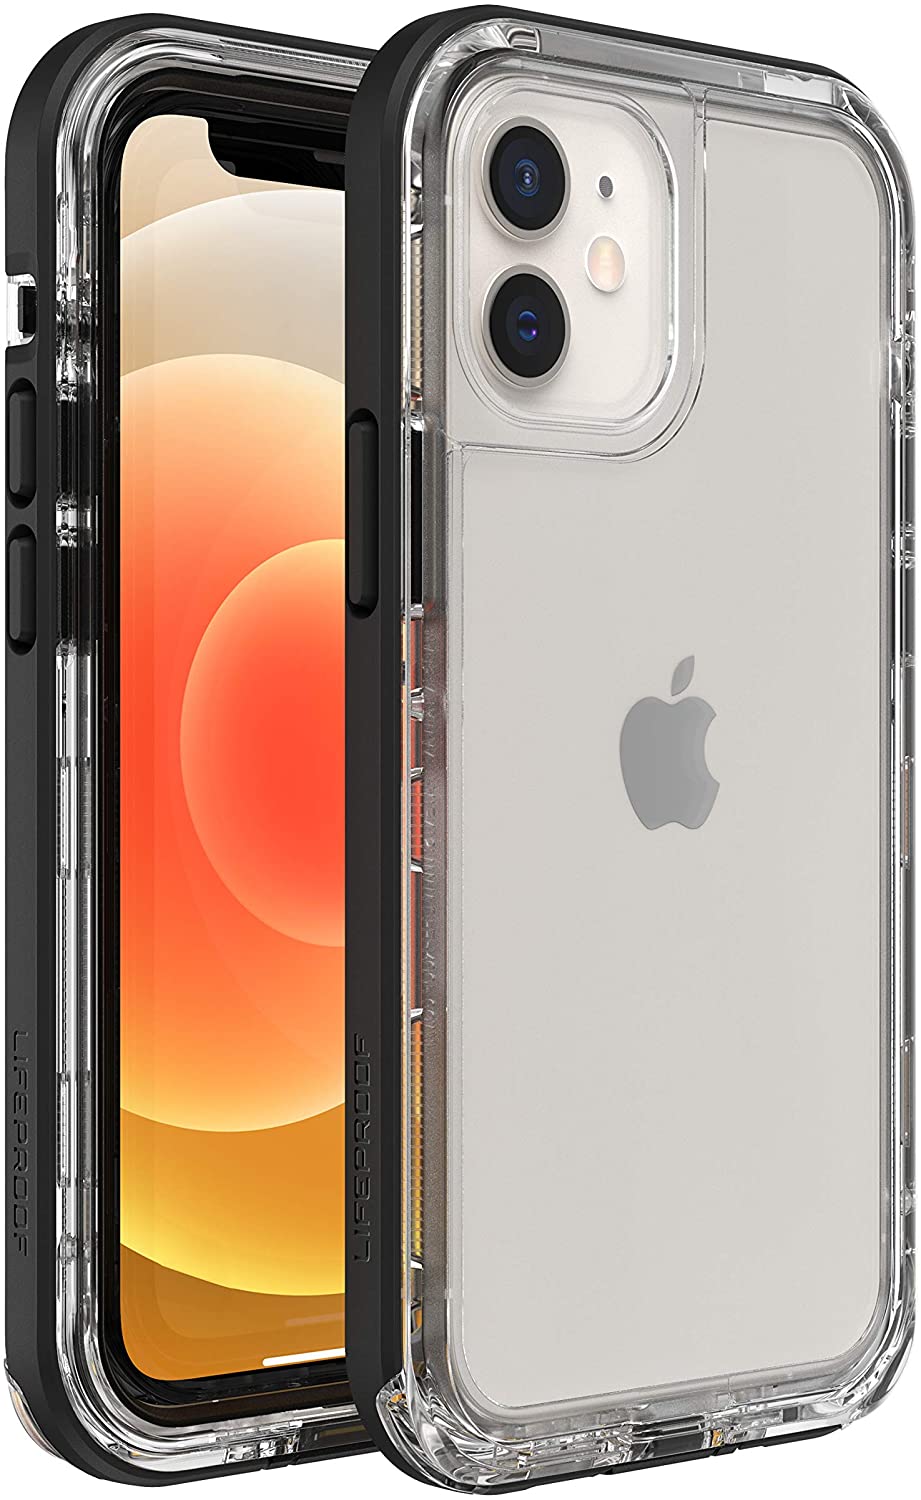 LifeProof NEXT SERIES Case for Apple iPhone 12 Mini - Black Crystal (Certified Refurbished)